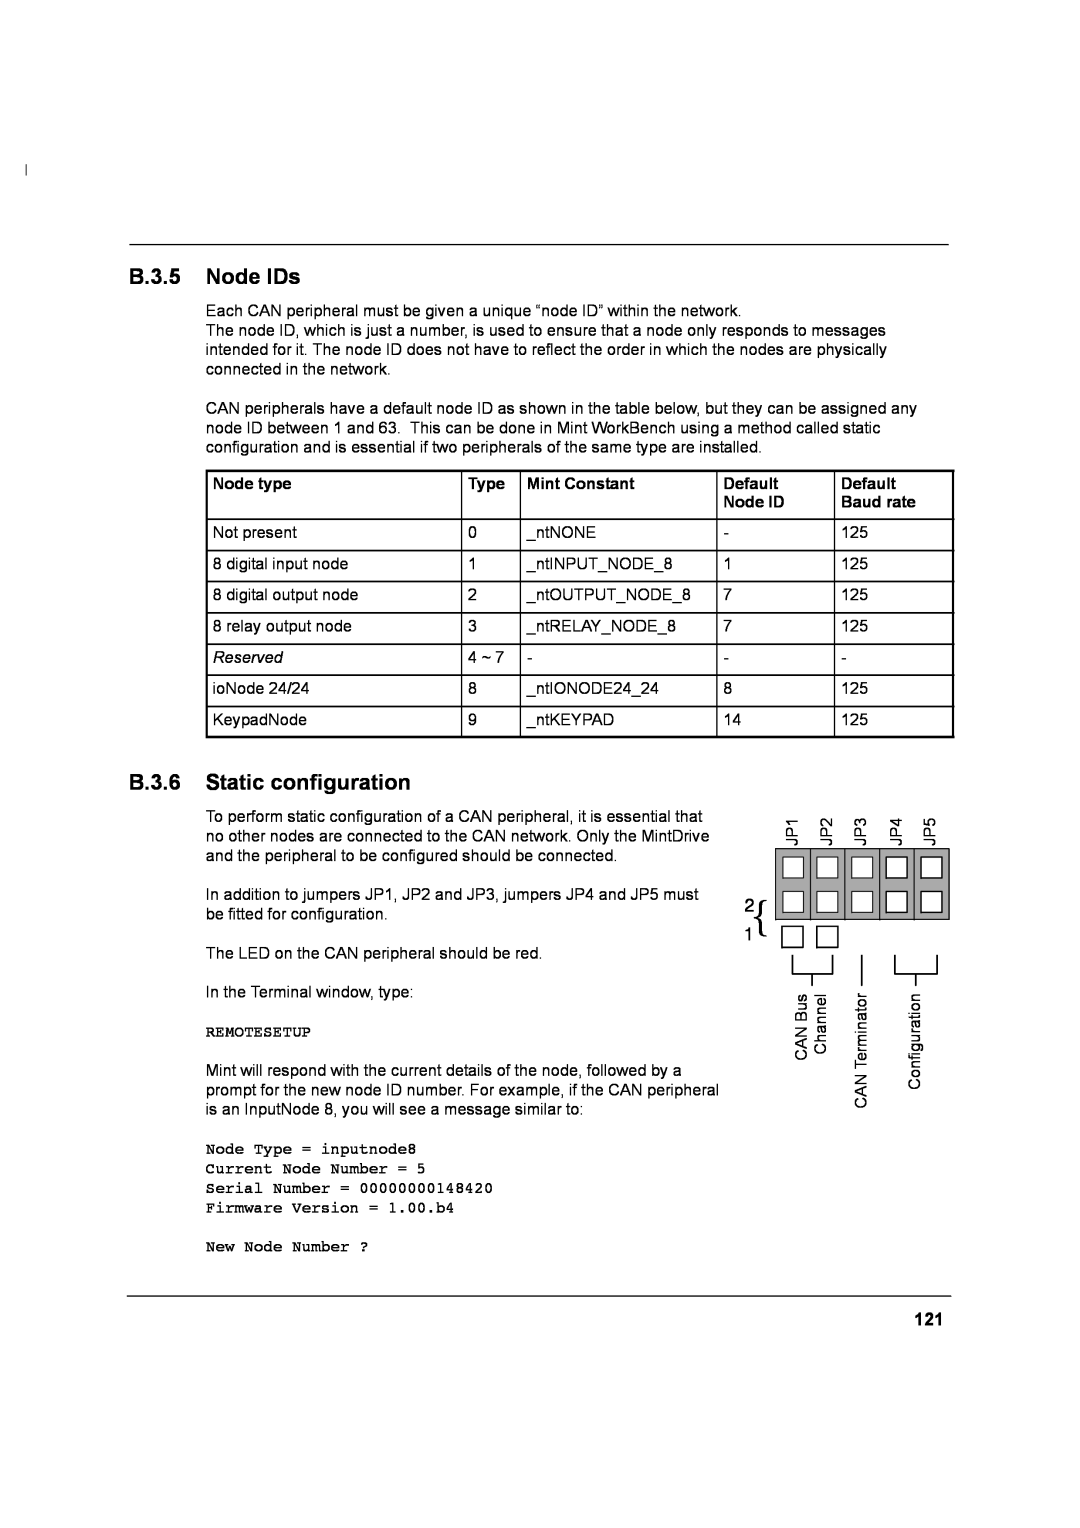 Baldor MN1274 06/2001 installation manual B.3.5 Node IDs, B.3.6 Static configuration, Remotesetup 